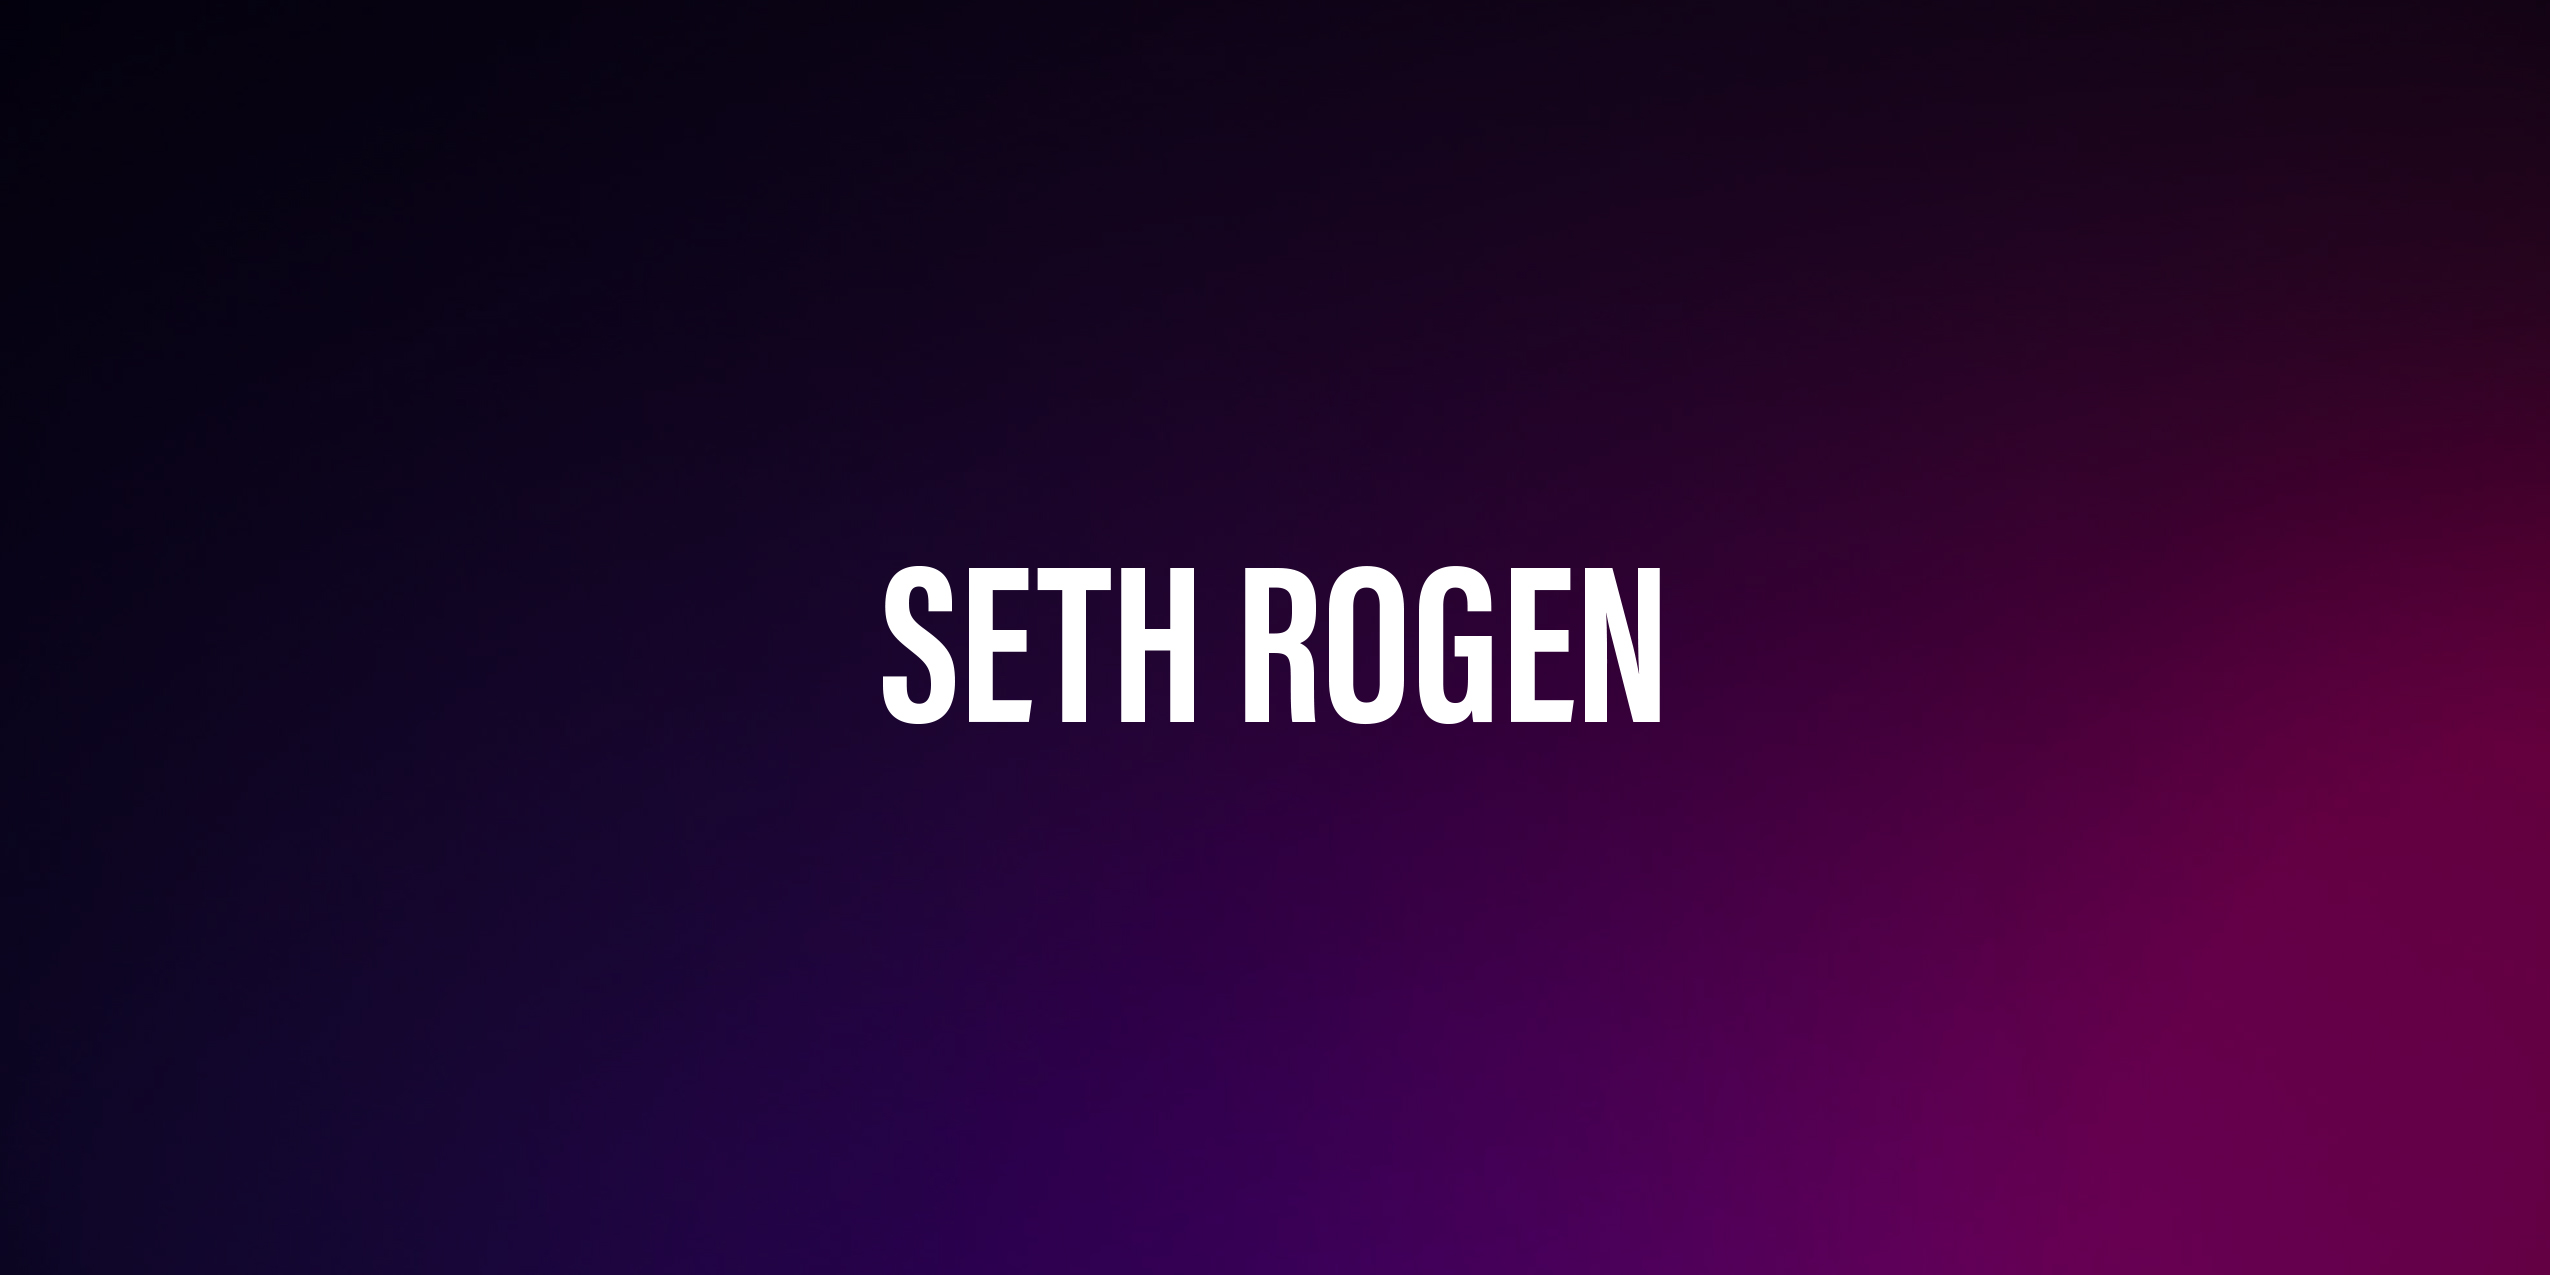 Seth Rogen – życiorys i filmografia